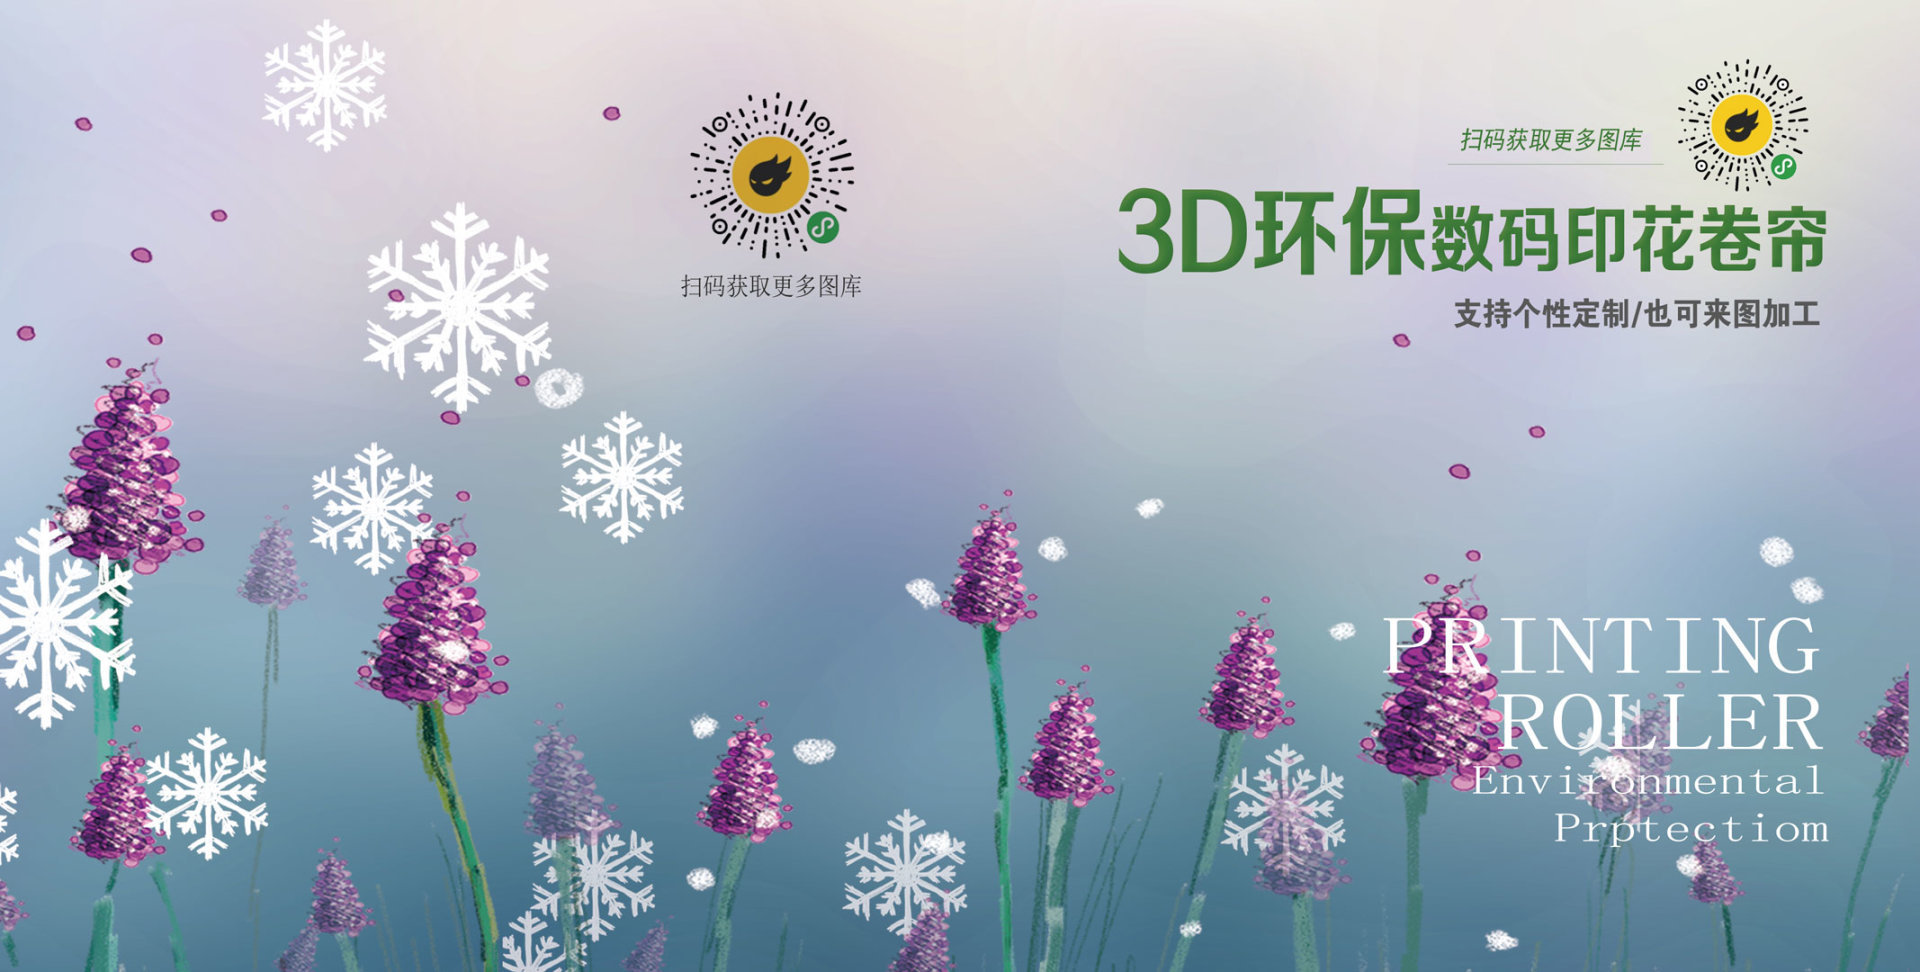 3D environment-friendly digital printing roller shutter